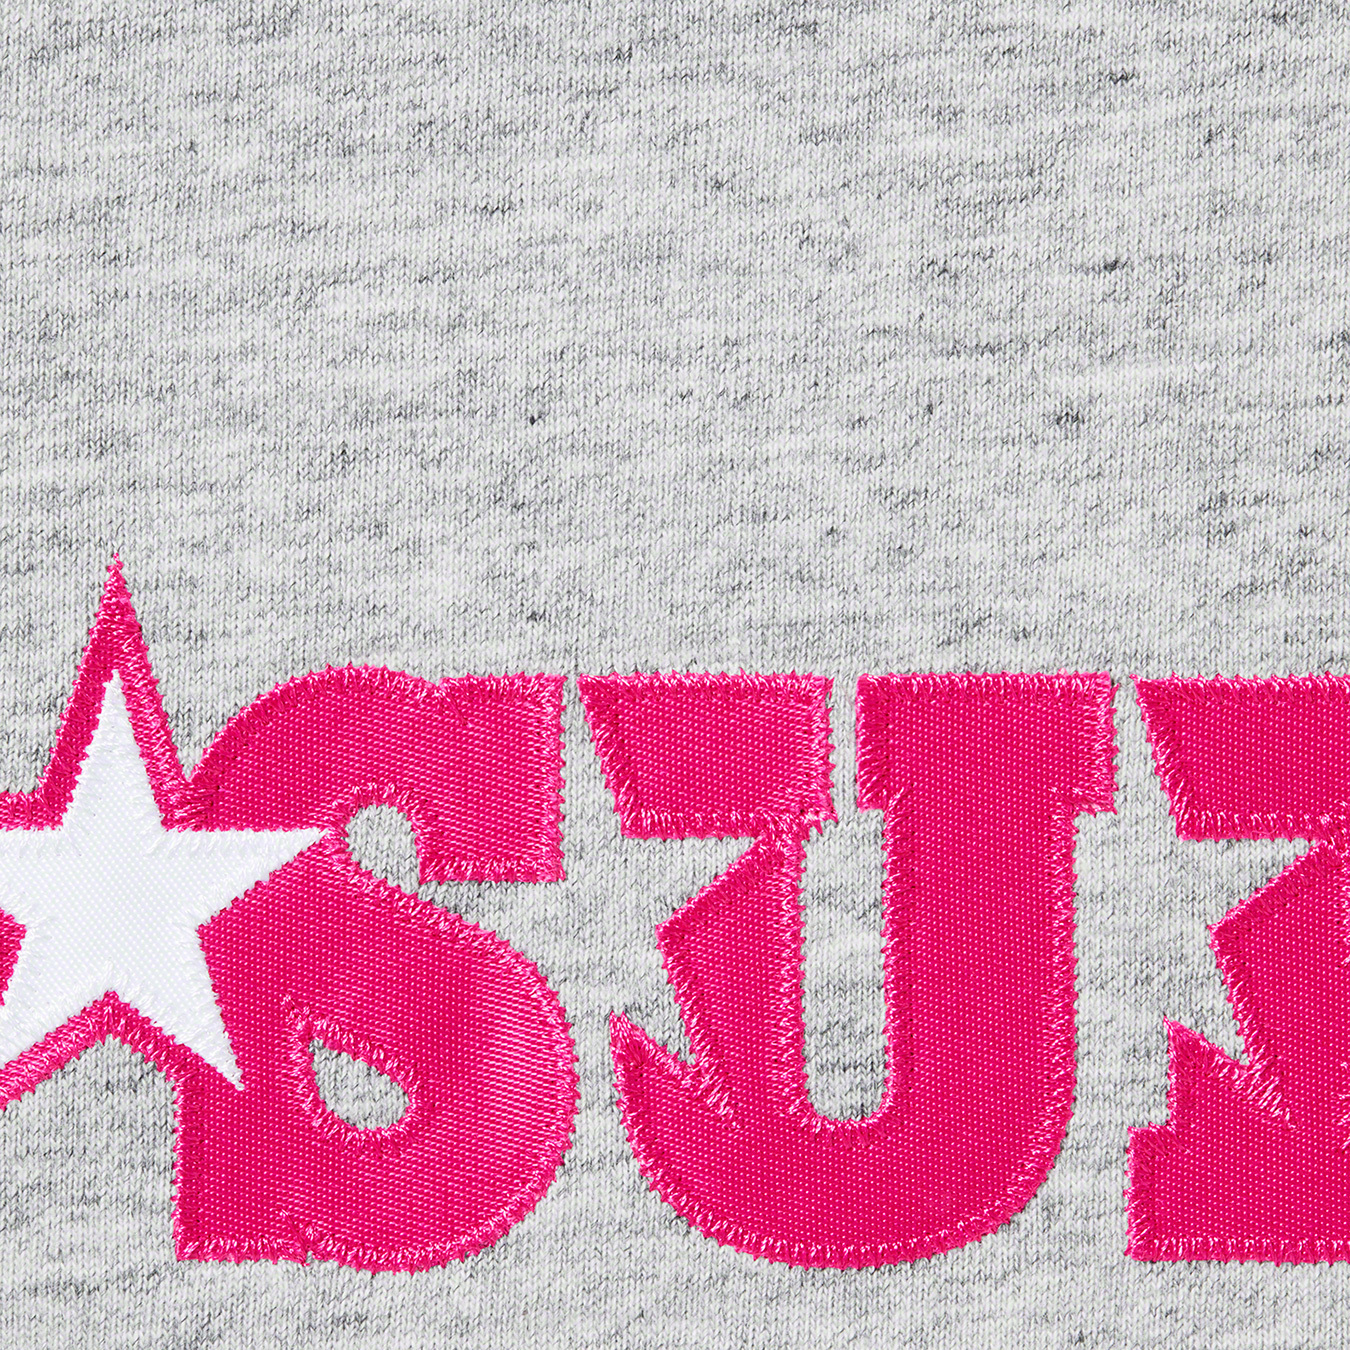 Star Logo S S Top - spring summer 2020 - Supreme